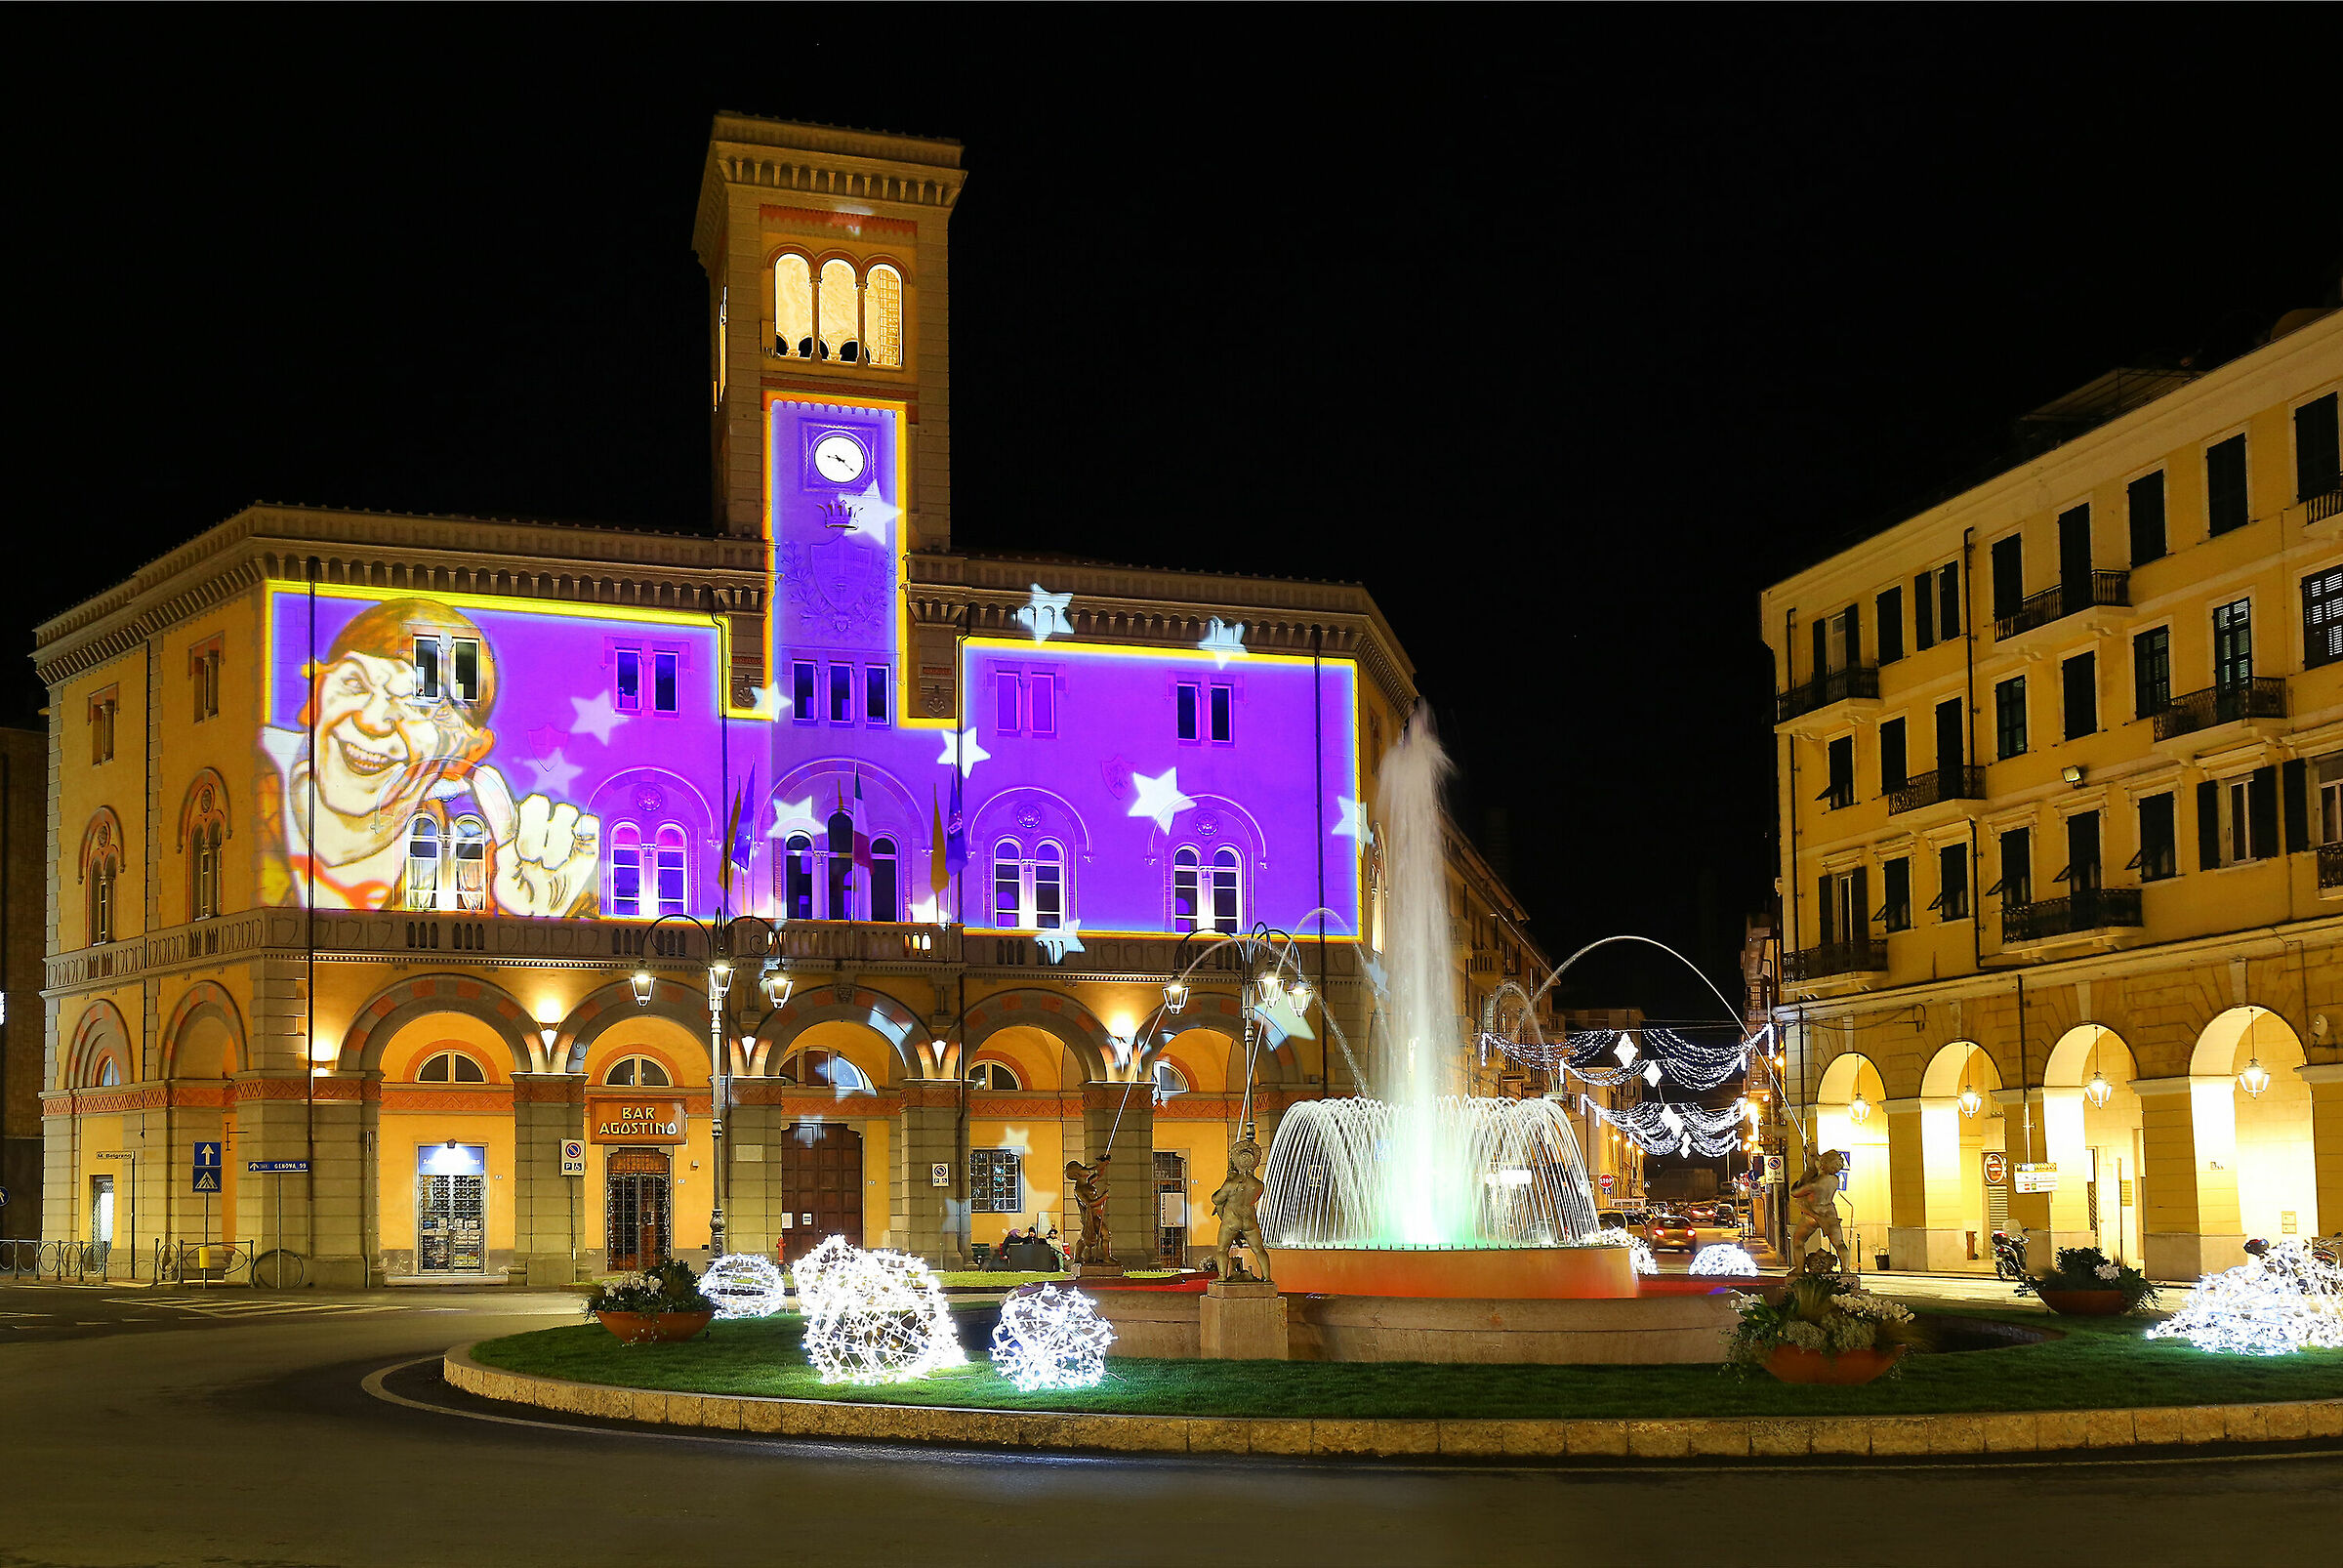 Dante Imperia Square...